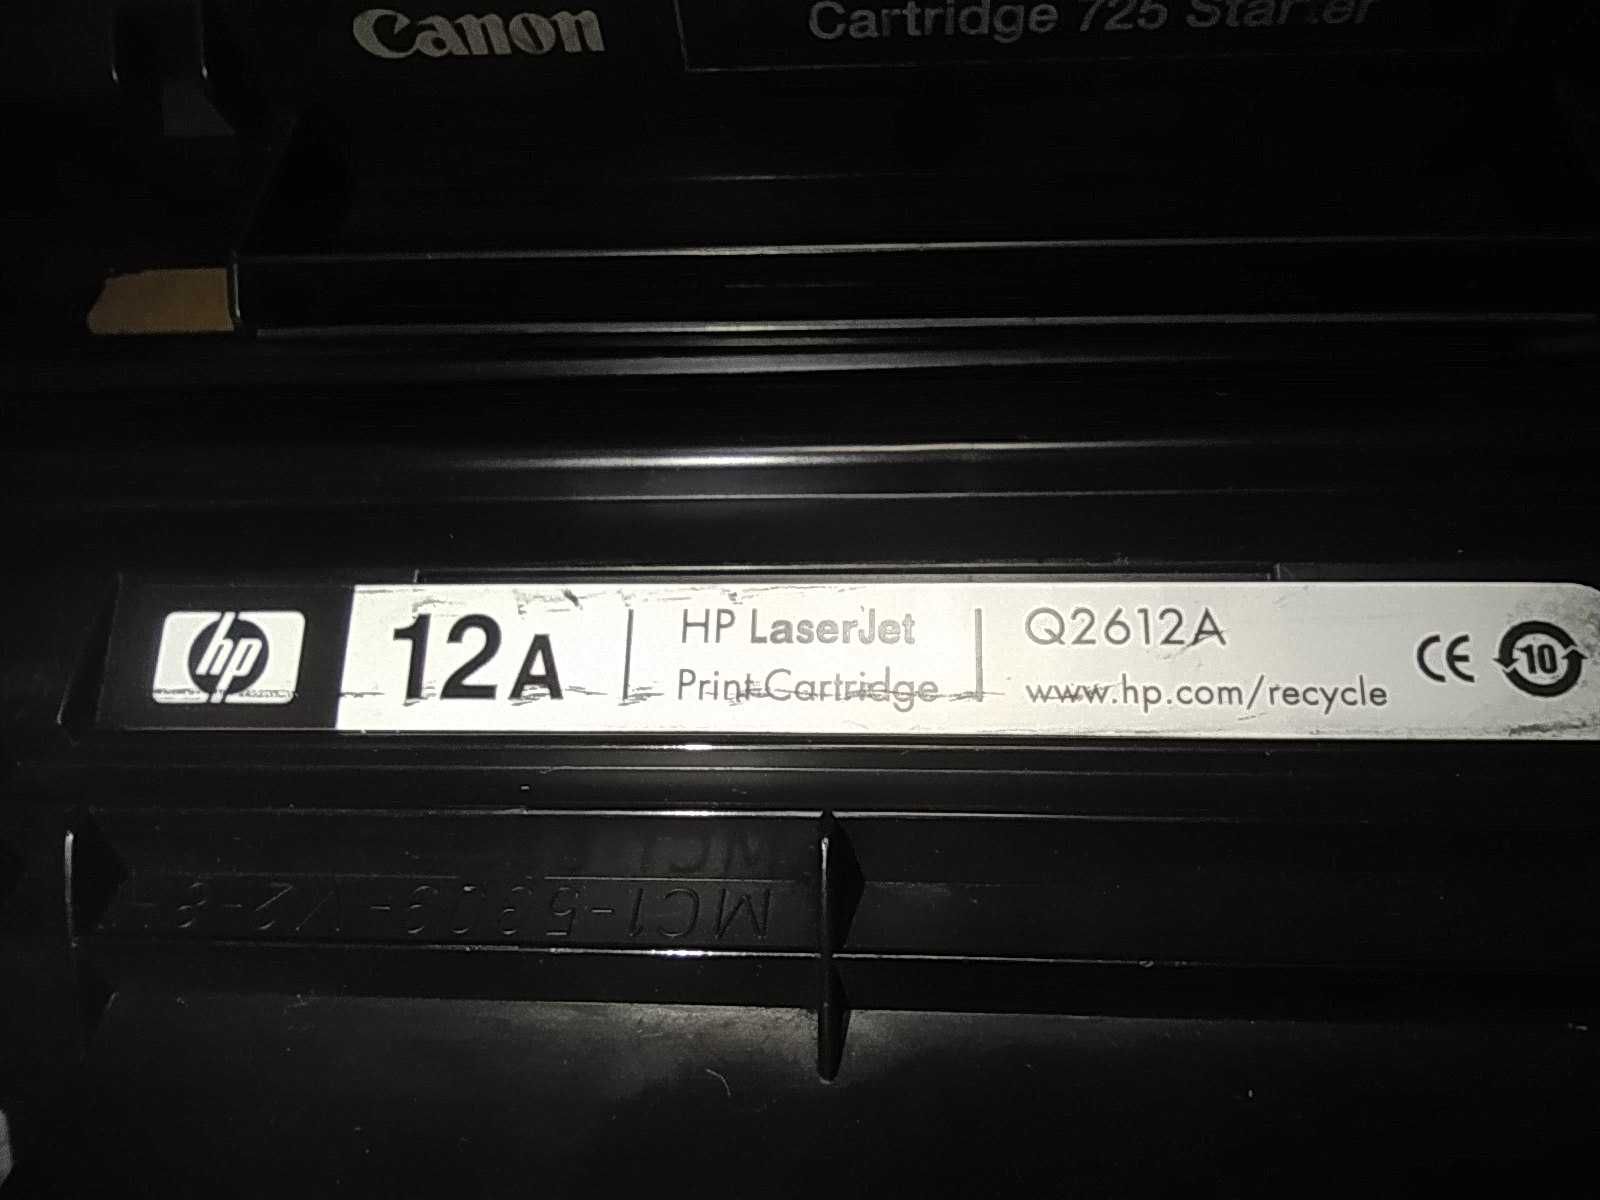 Картридж Xerox 109R00725 для принтера Phaser Canon 725